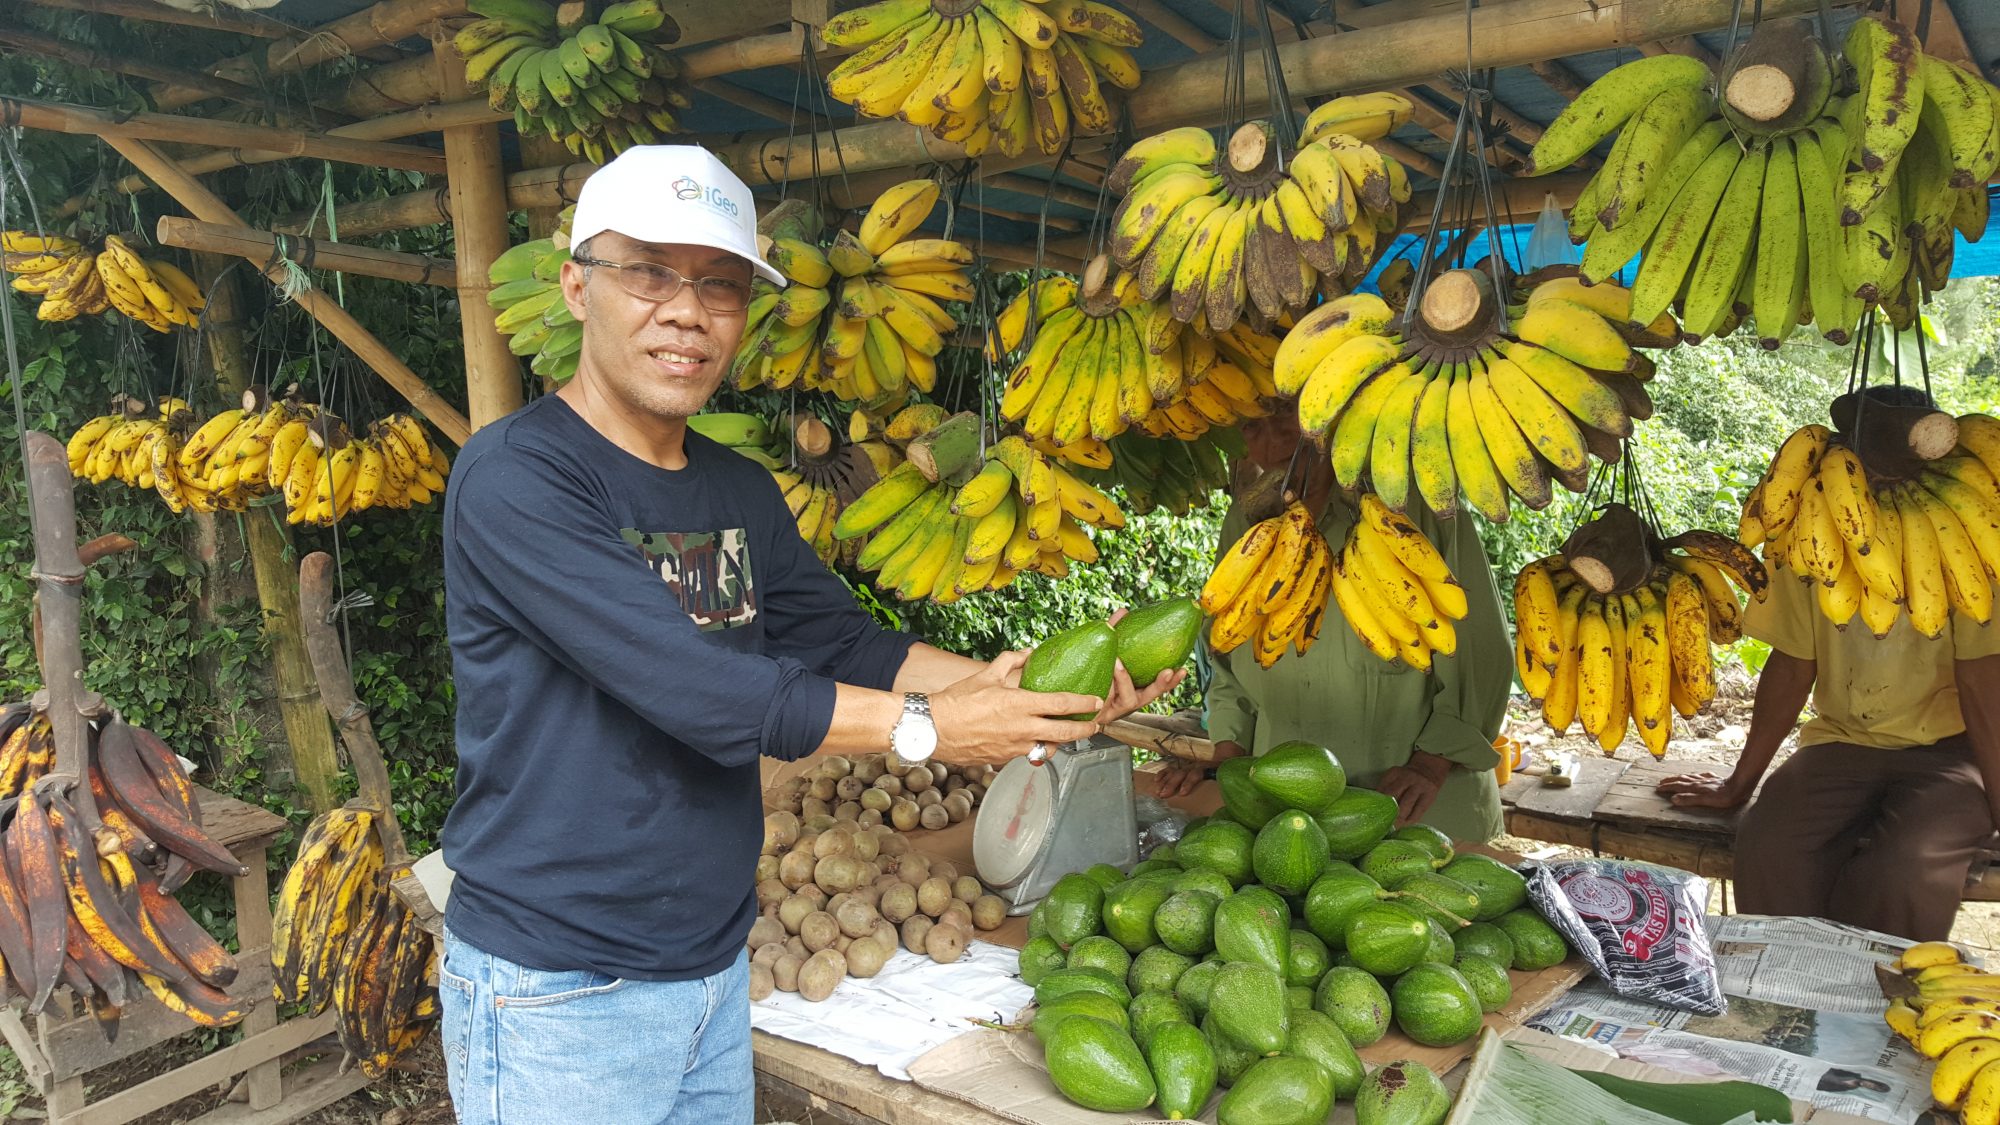 Man selling bananas and avocados on street market